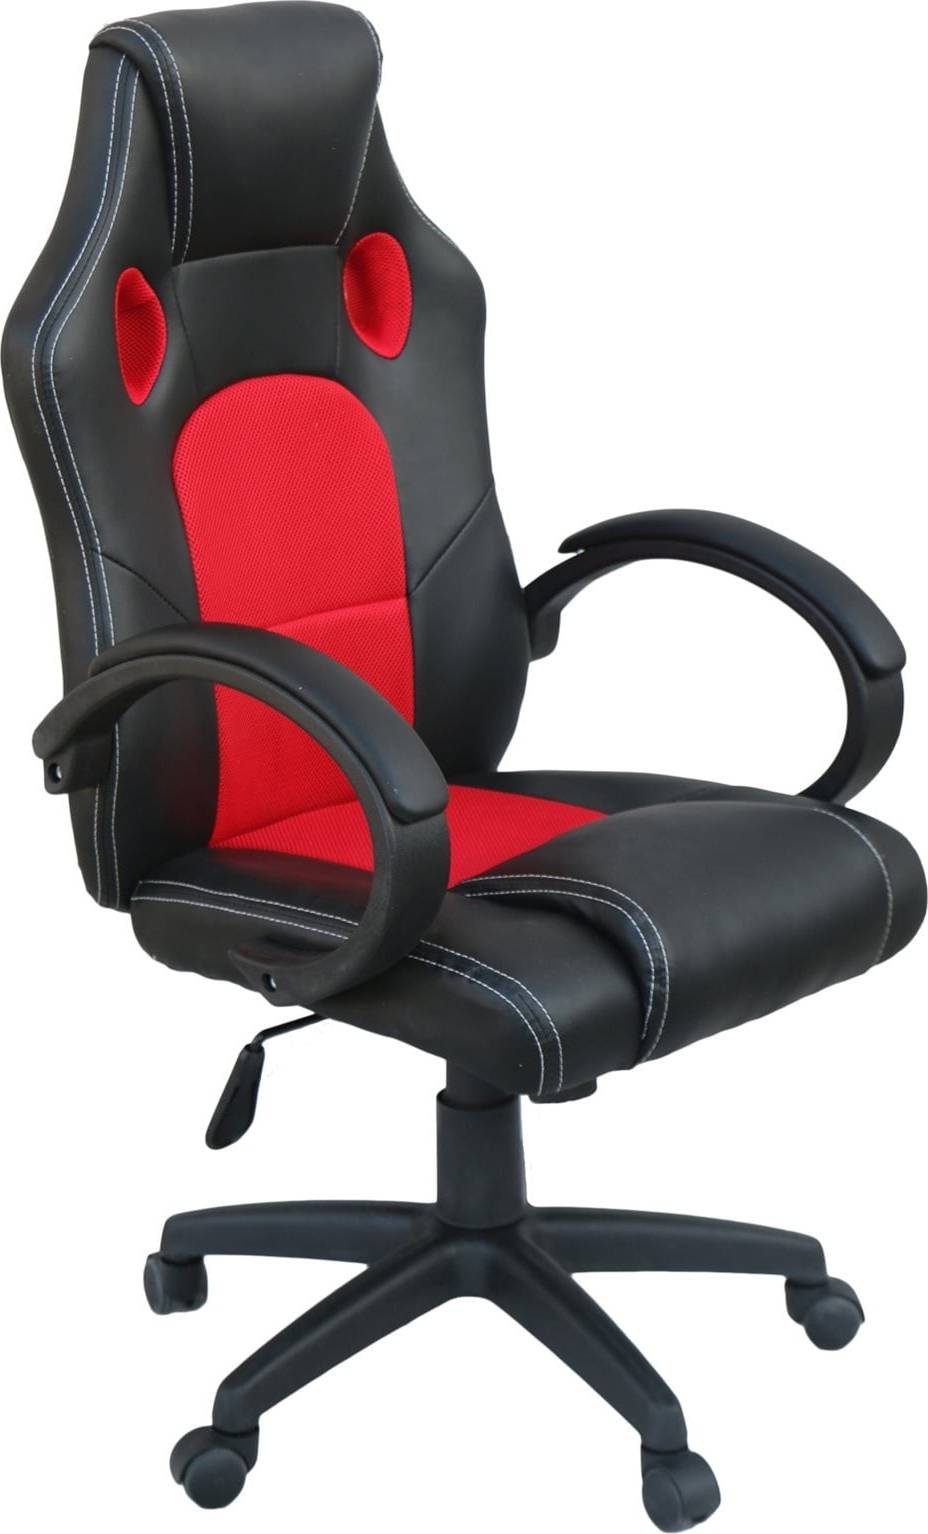  Bild på Macao Gamer Chair - Black/Red gamingstol